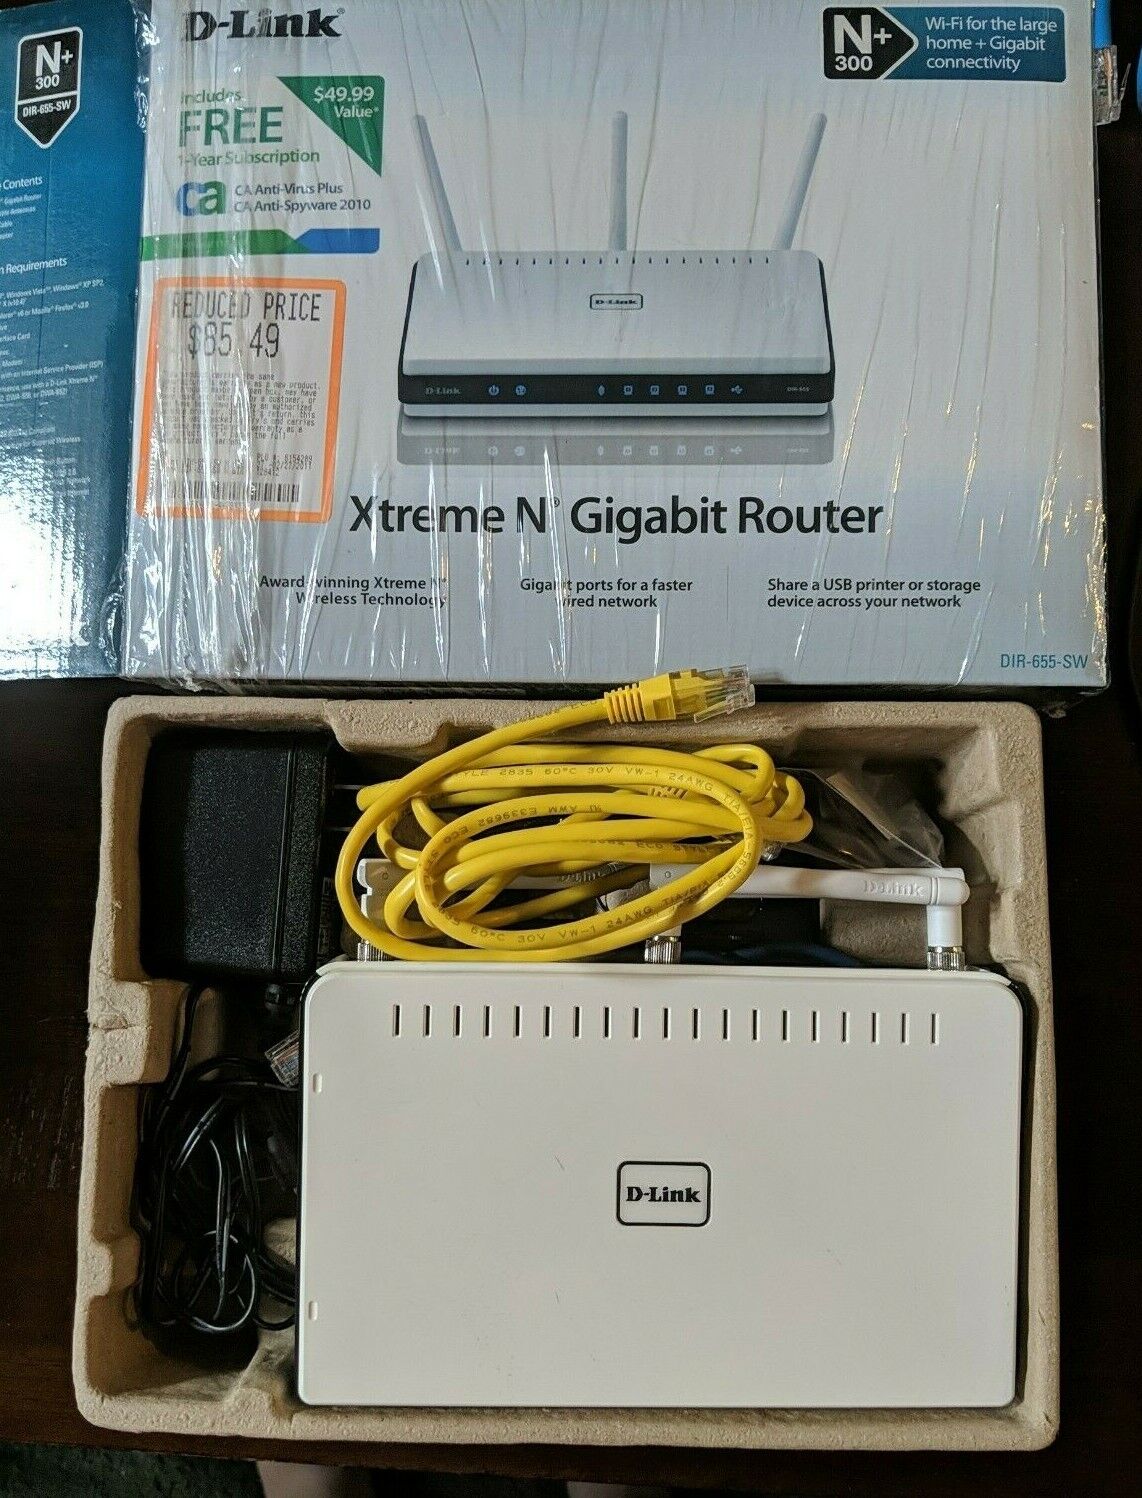 D-link Xtreme N Gigabit Router